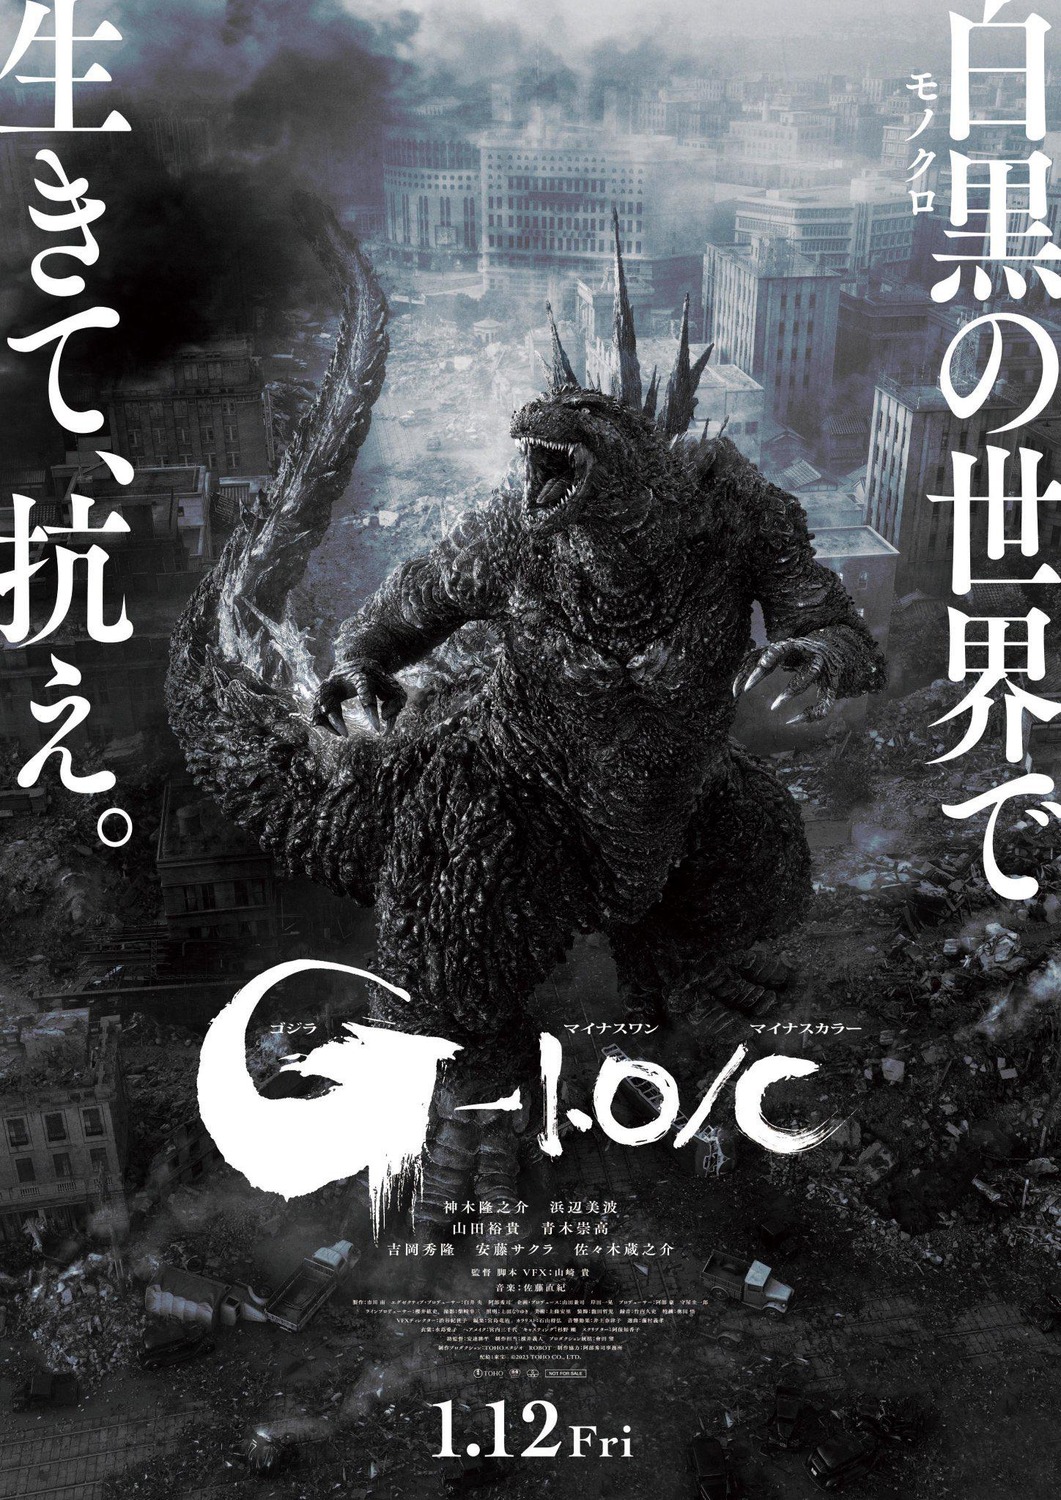 Extra Large Movie Poster Image for Godzilla: Minus One (#9 of 11)